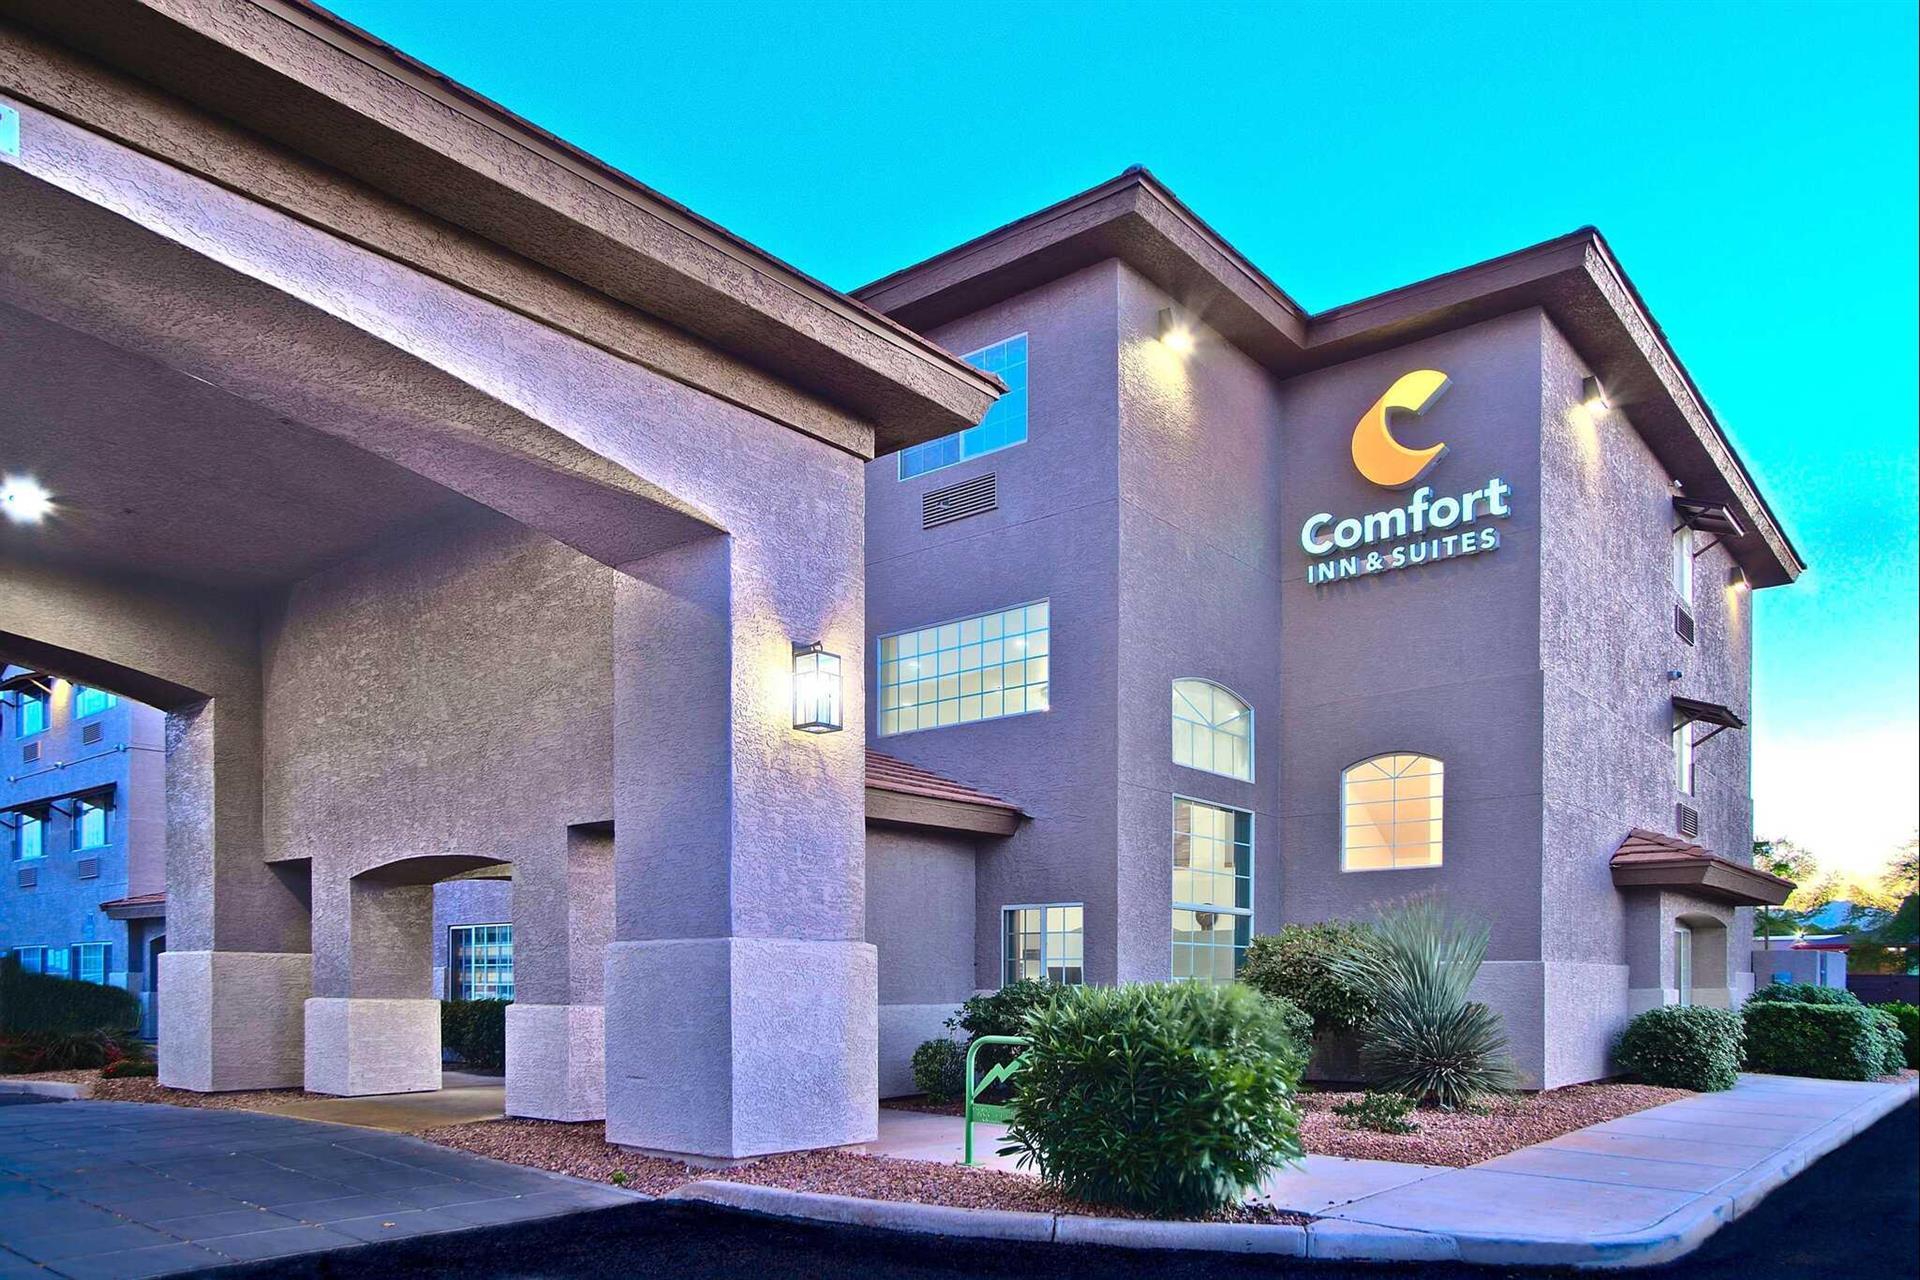 Comfort Inn and Suites Sierra Vista near Ft Huachu in Sierra Vista, AZ